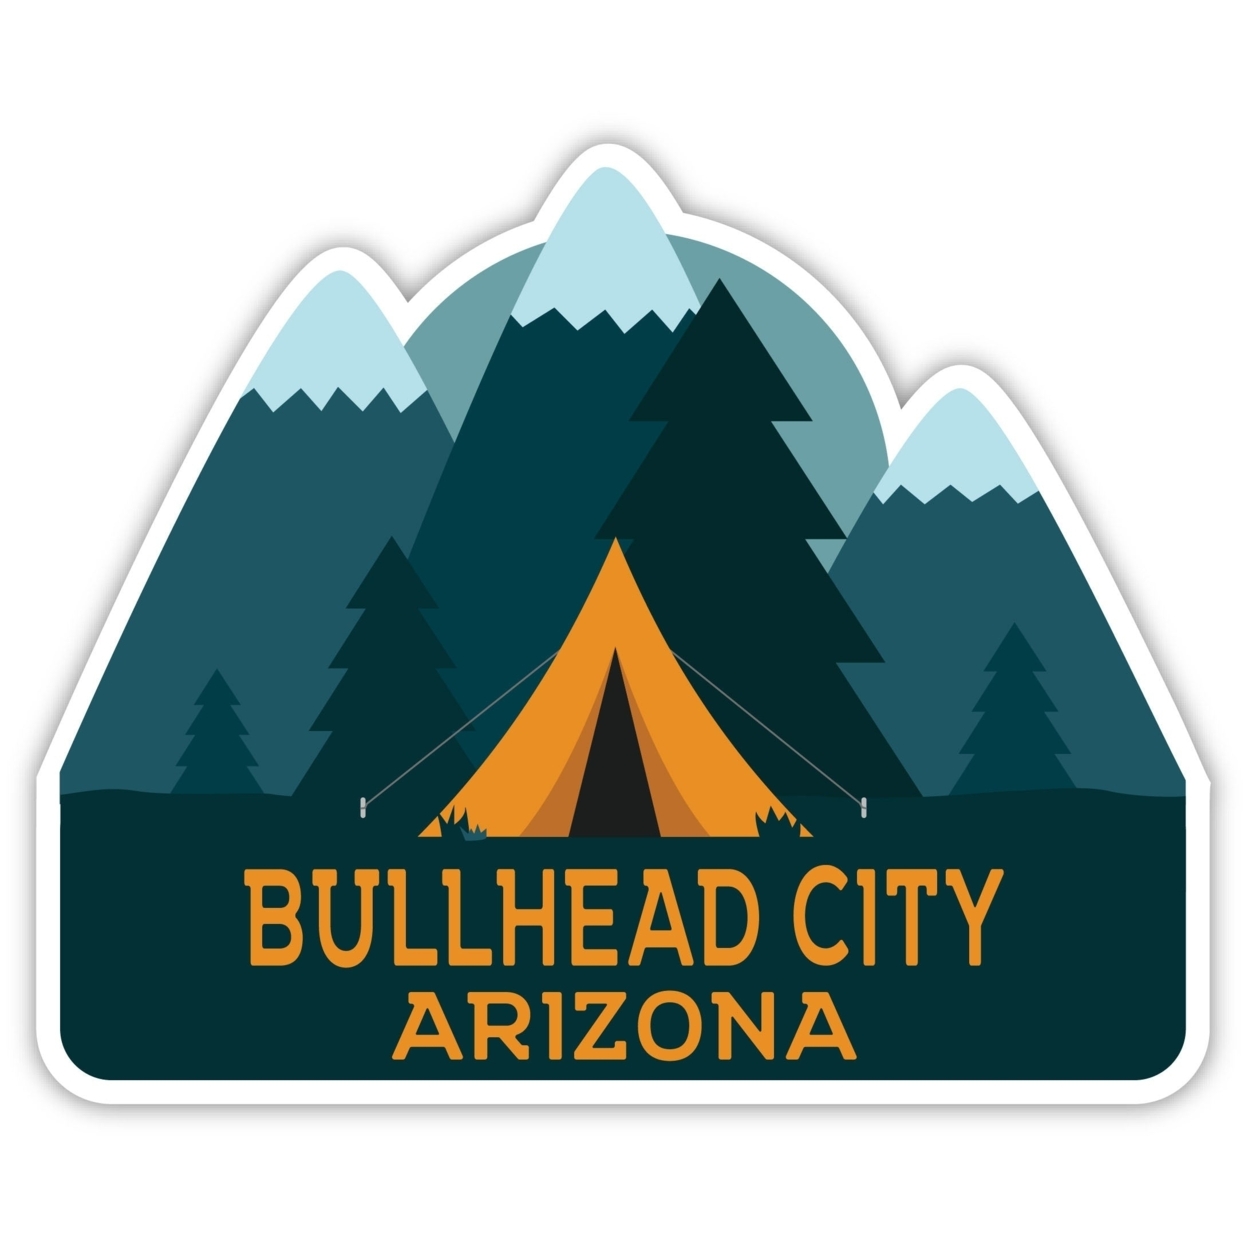 Bullhead City Arizona Souvenir Decorative Stickers (Choose Theme And Size) - Single Unit, 8-Inch, Camp Life